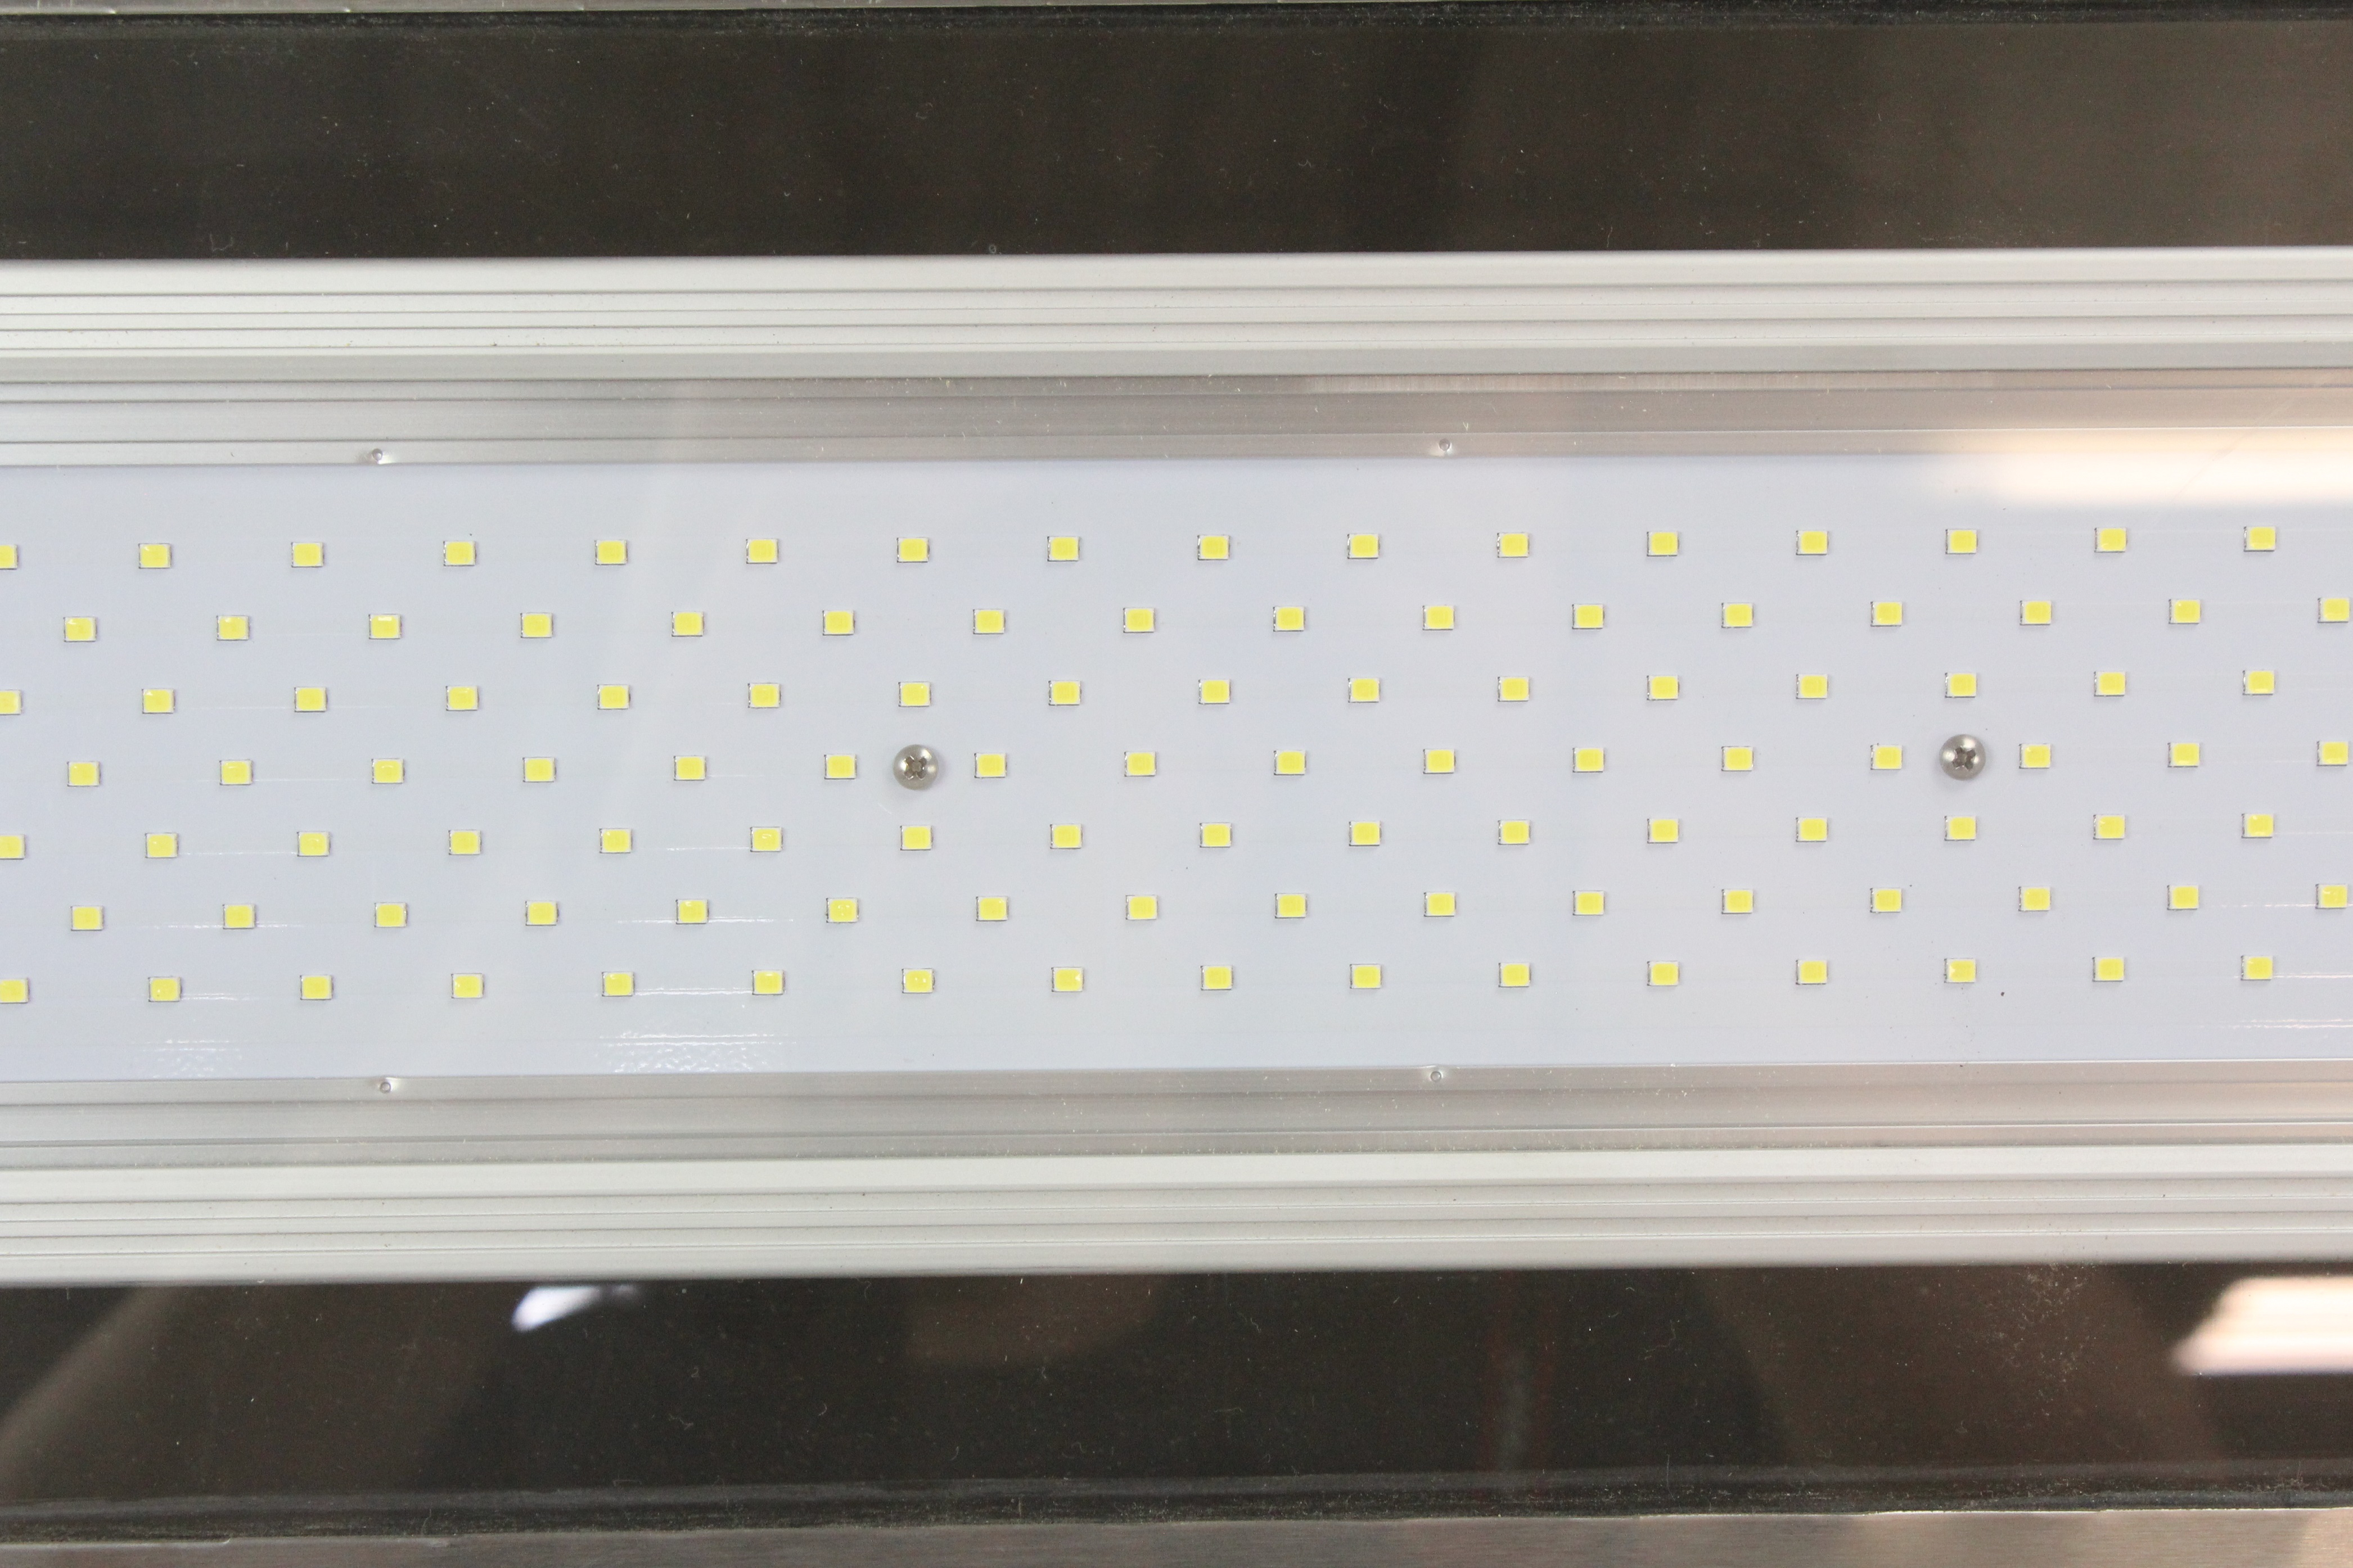 160 Watt Integrated LED Light Array that produces 19,200 lumens of light